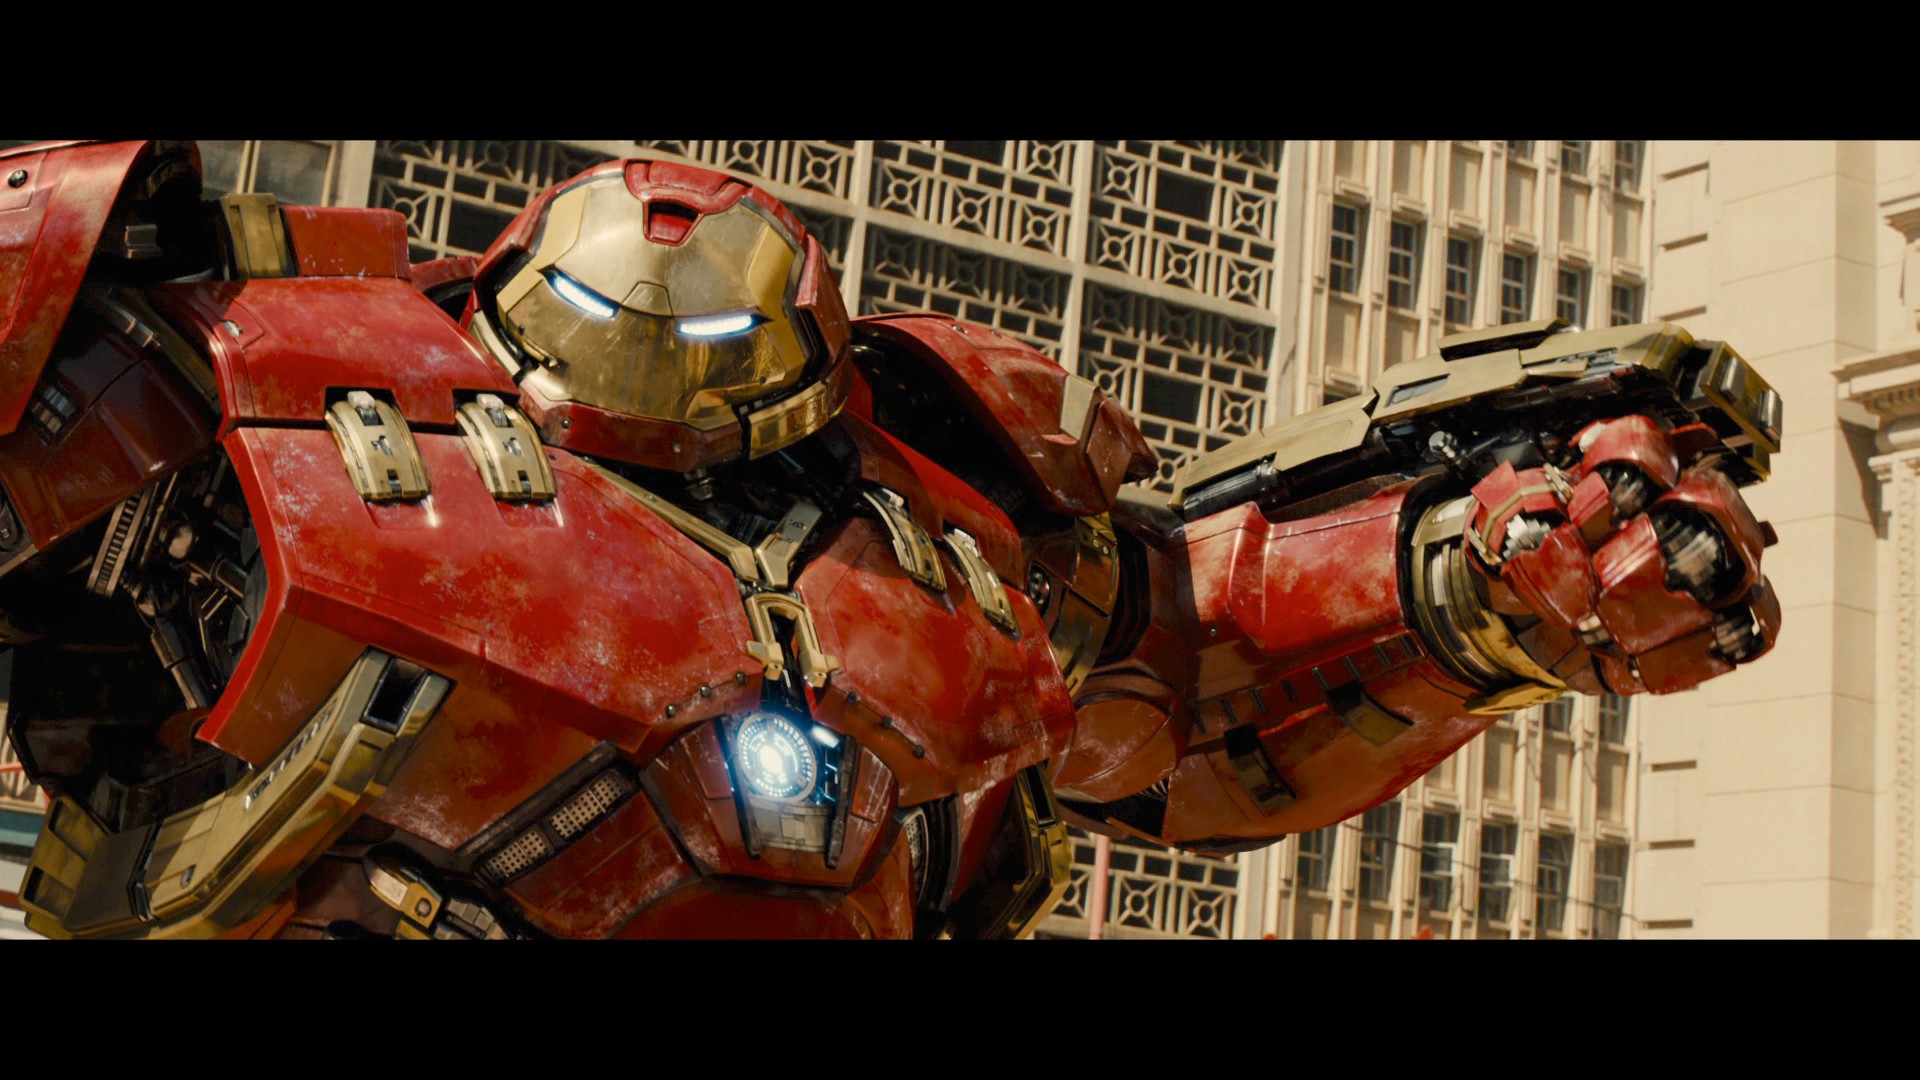 General 1920x1080 Iron Man Avengers: Age of Ultron movies film stills Hulkbuster Marvel Cinematic Universe